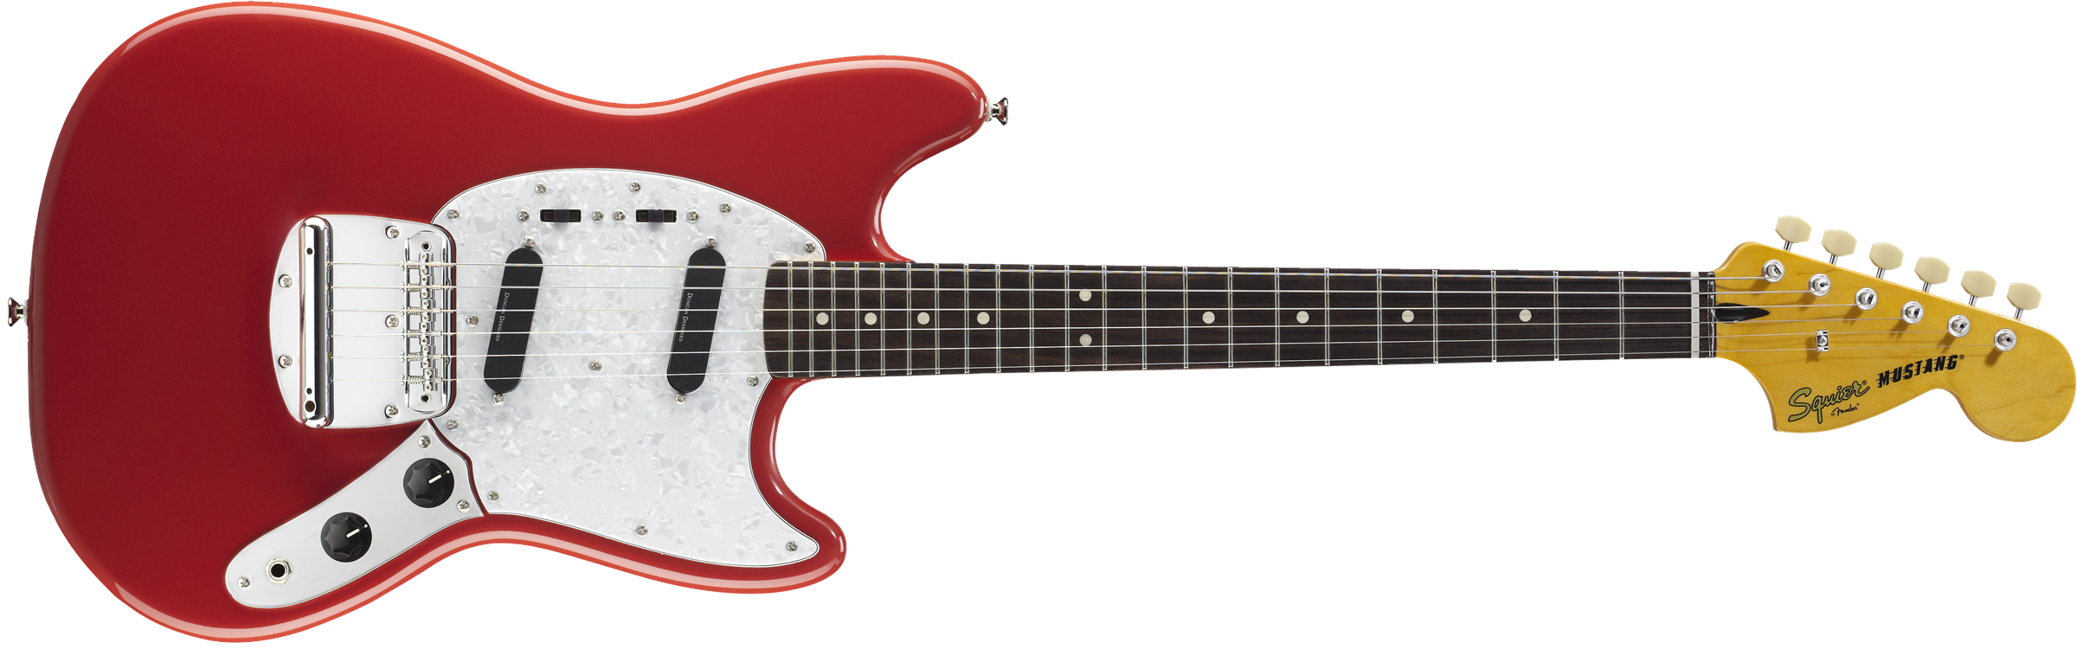 Squier By Fender - Vintage Modified Mustang - Elektrisk Guitar (Fiesta Red)